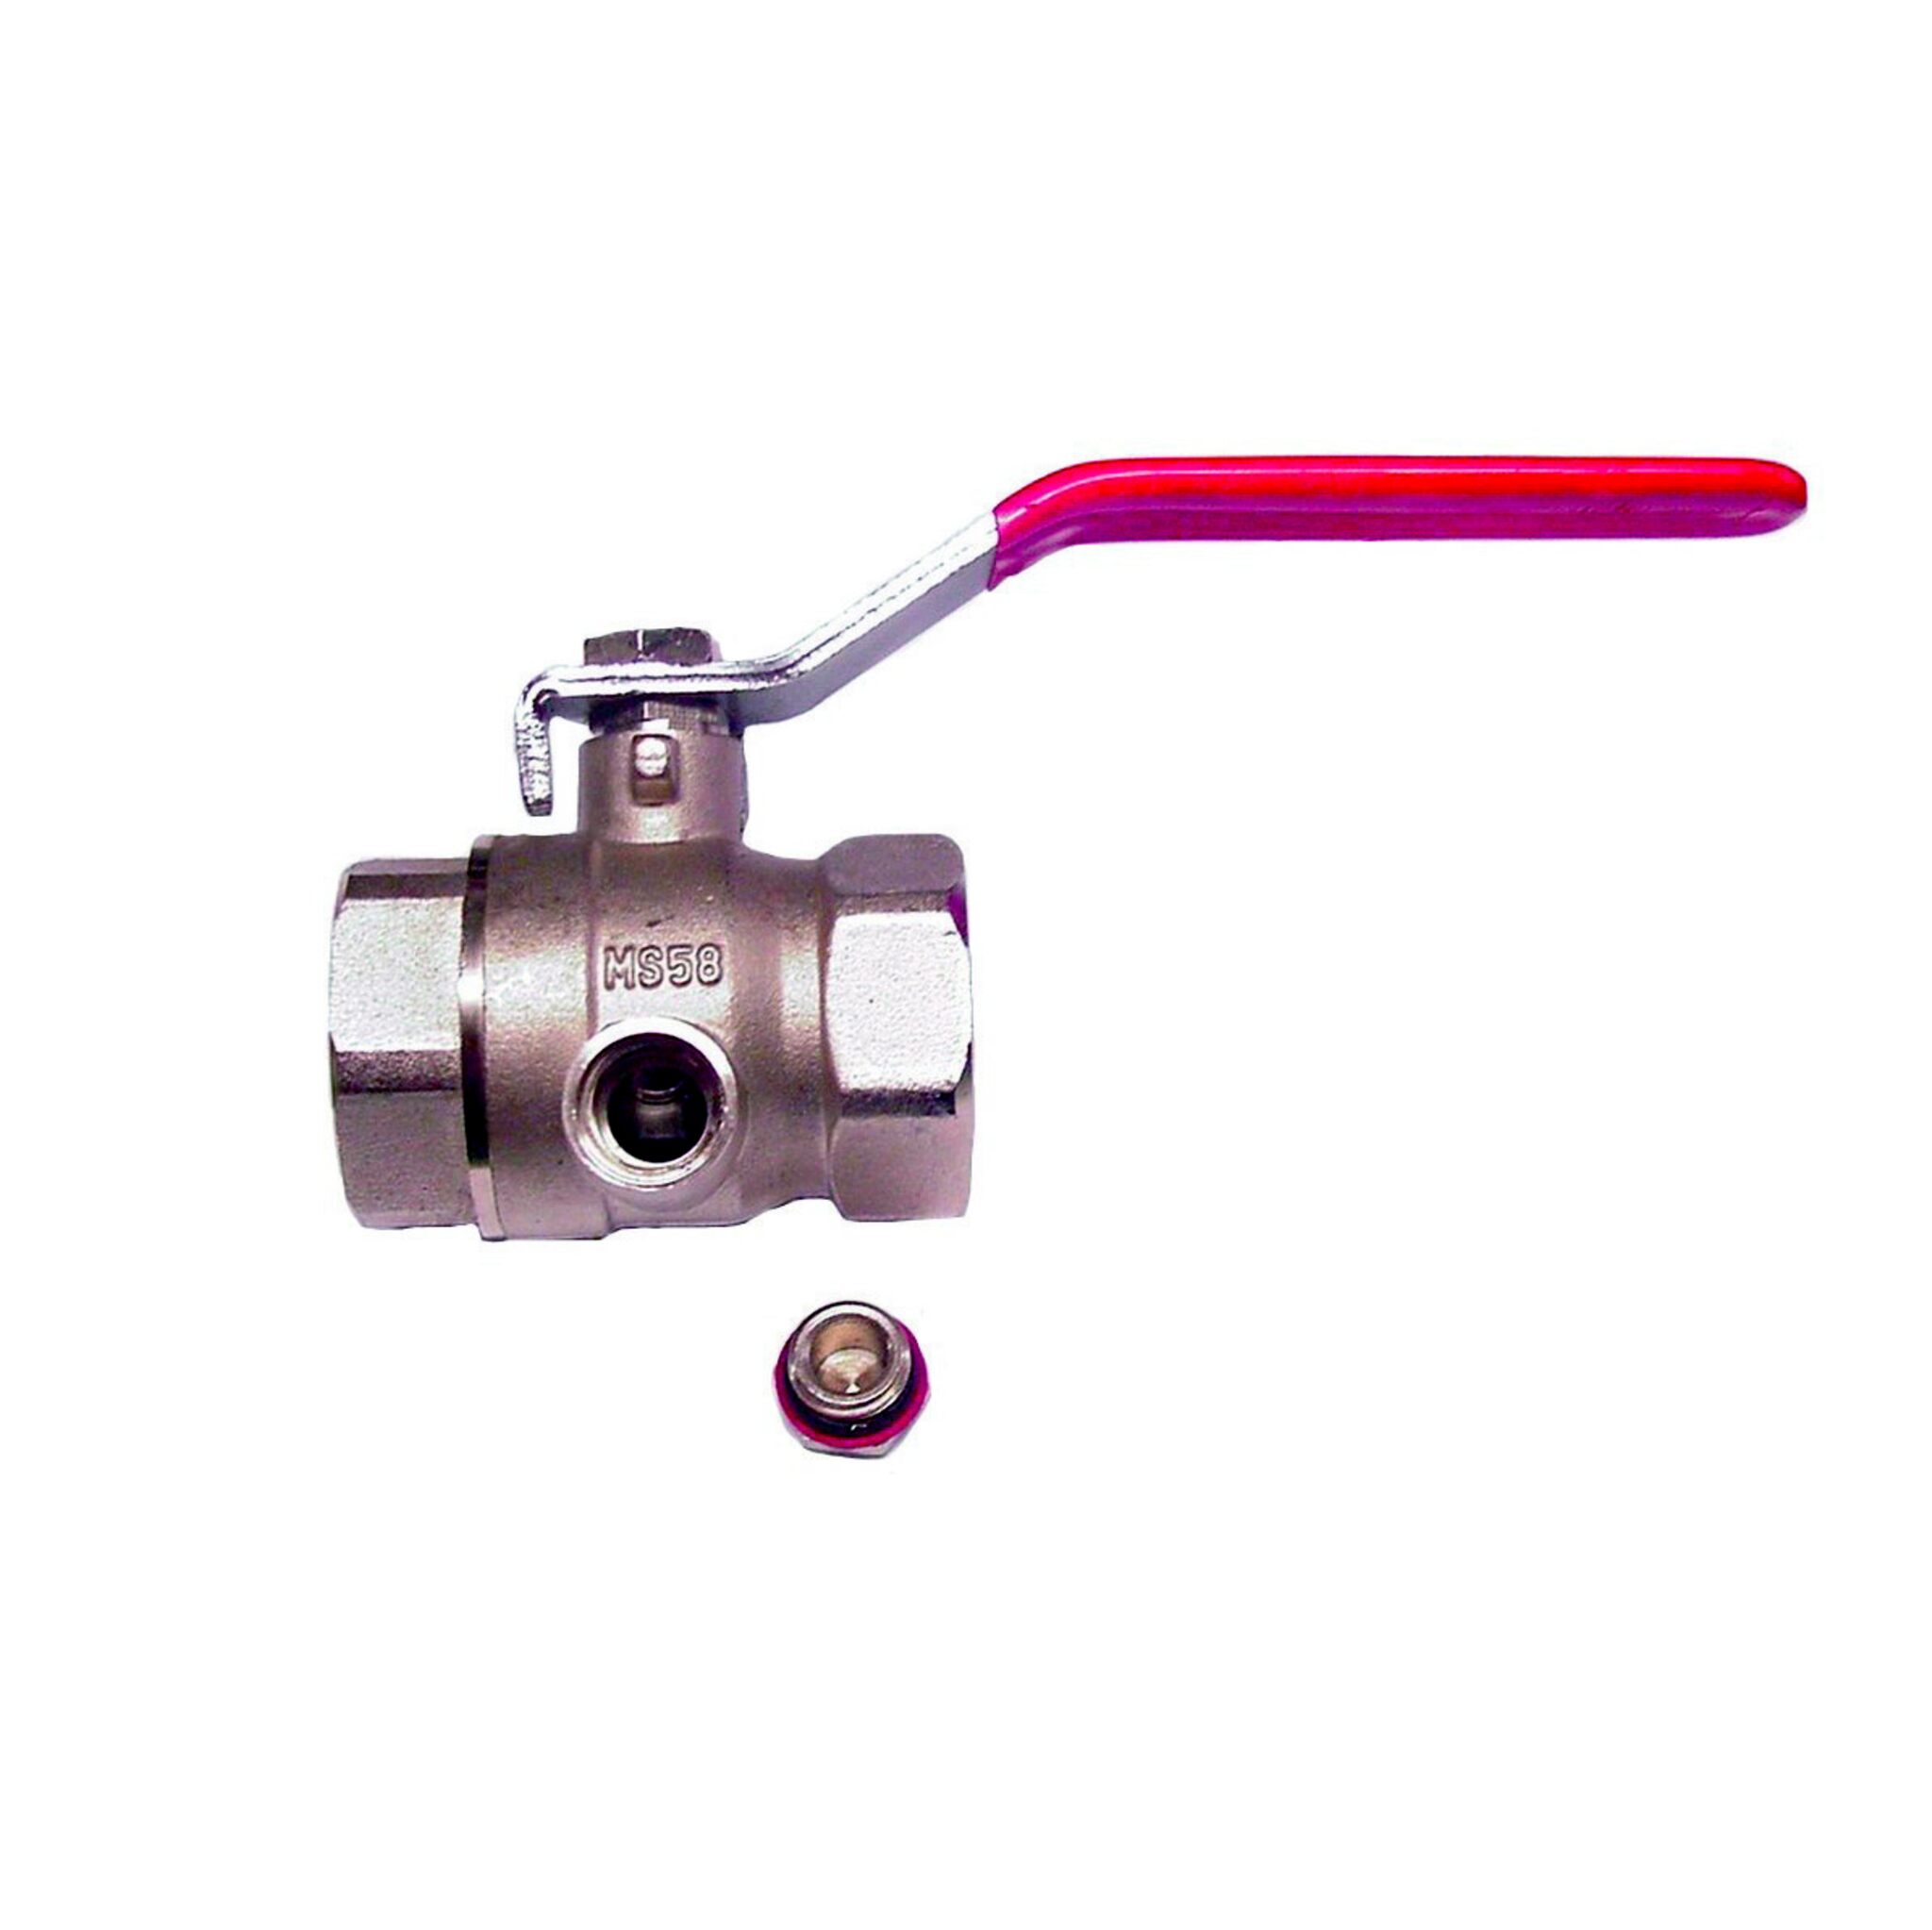 Ball valve with anti-freeze device type 109